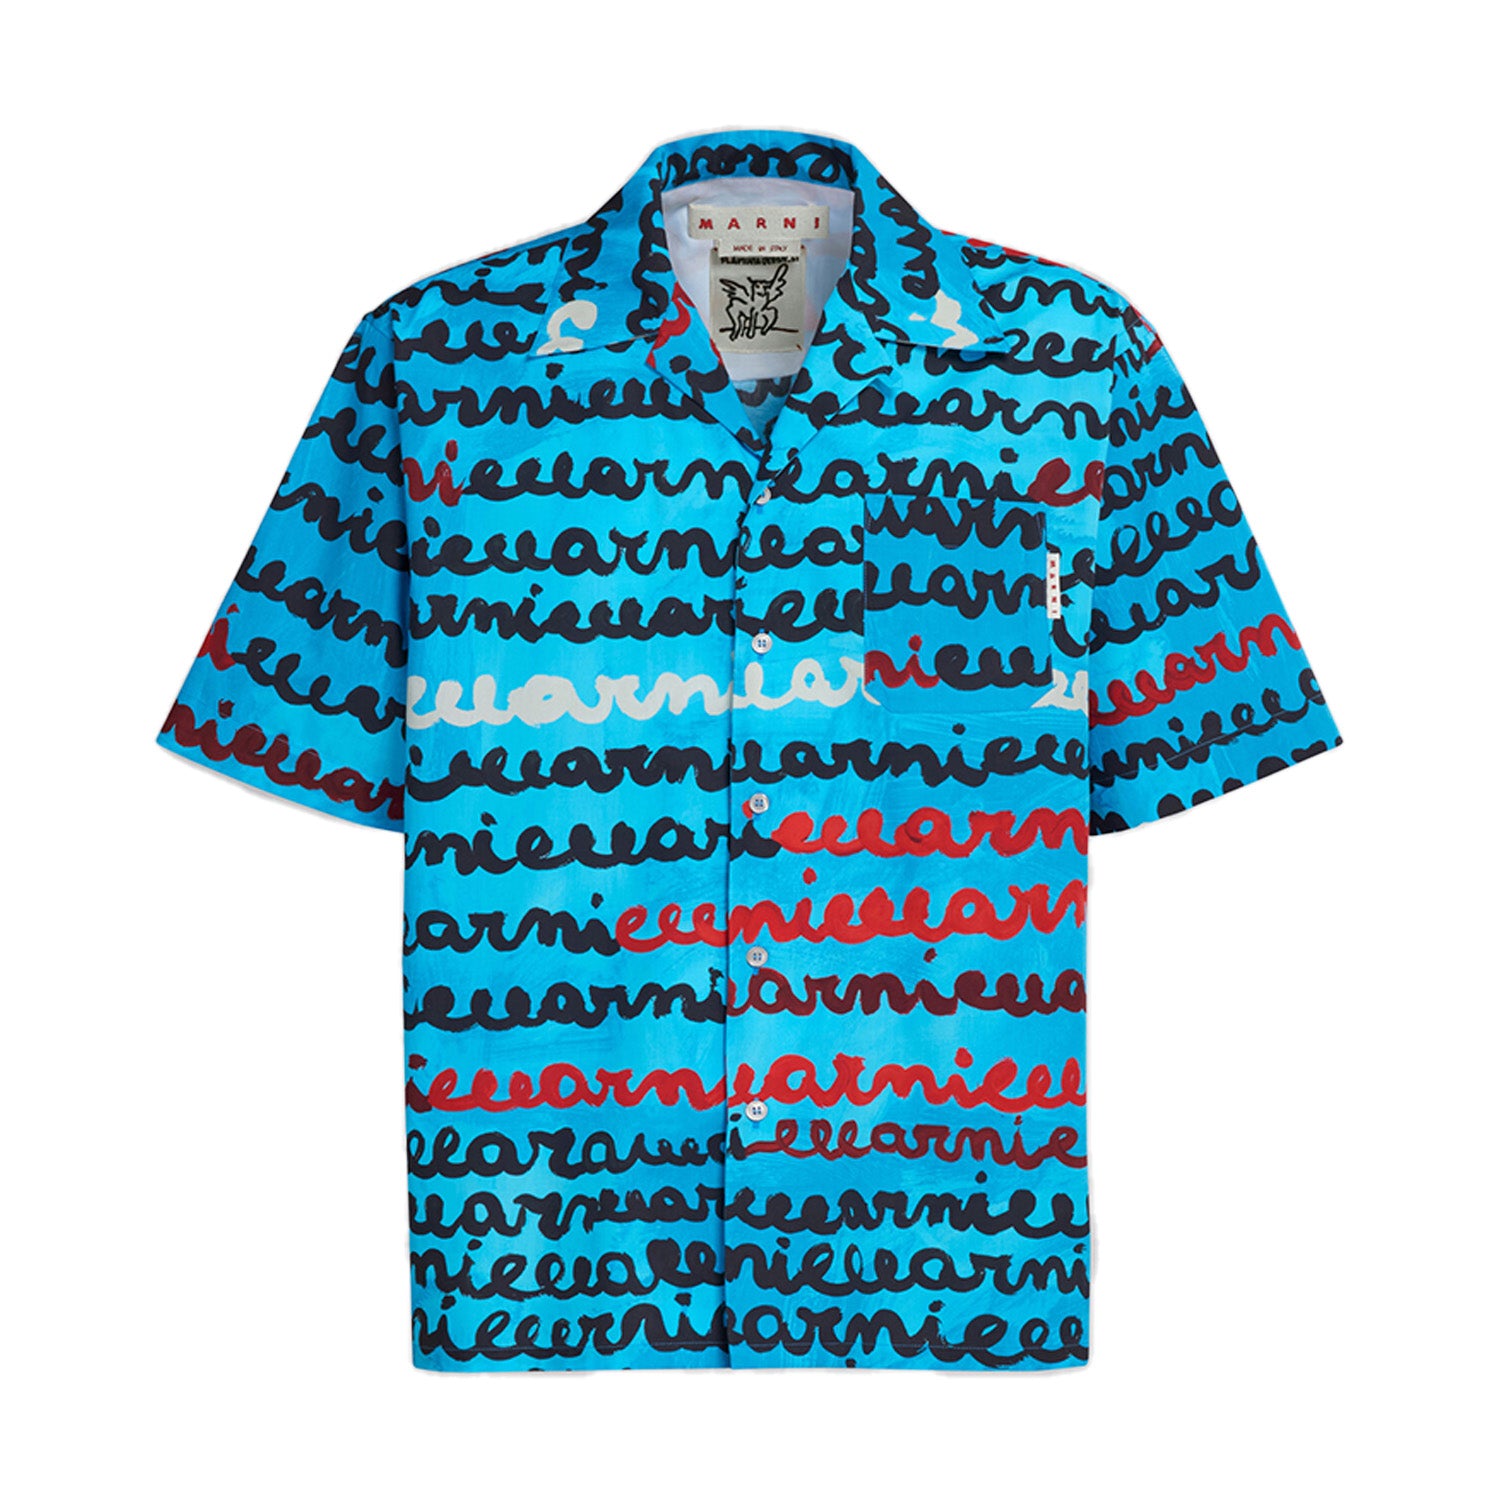 Maremarni Poplin Shirt (Turquoise)